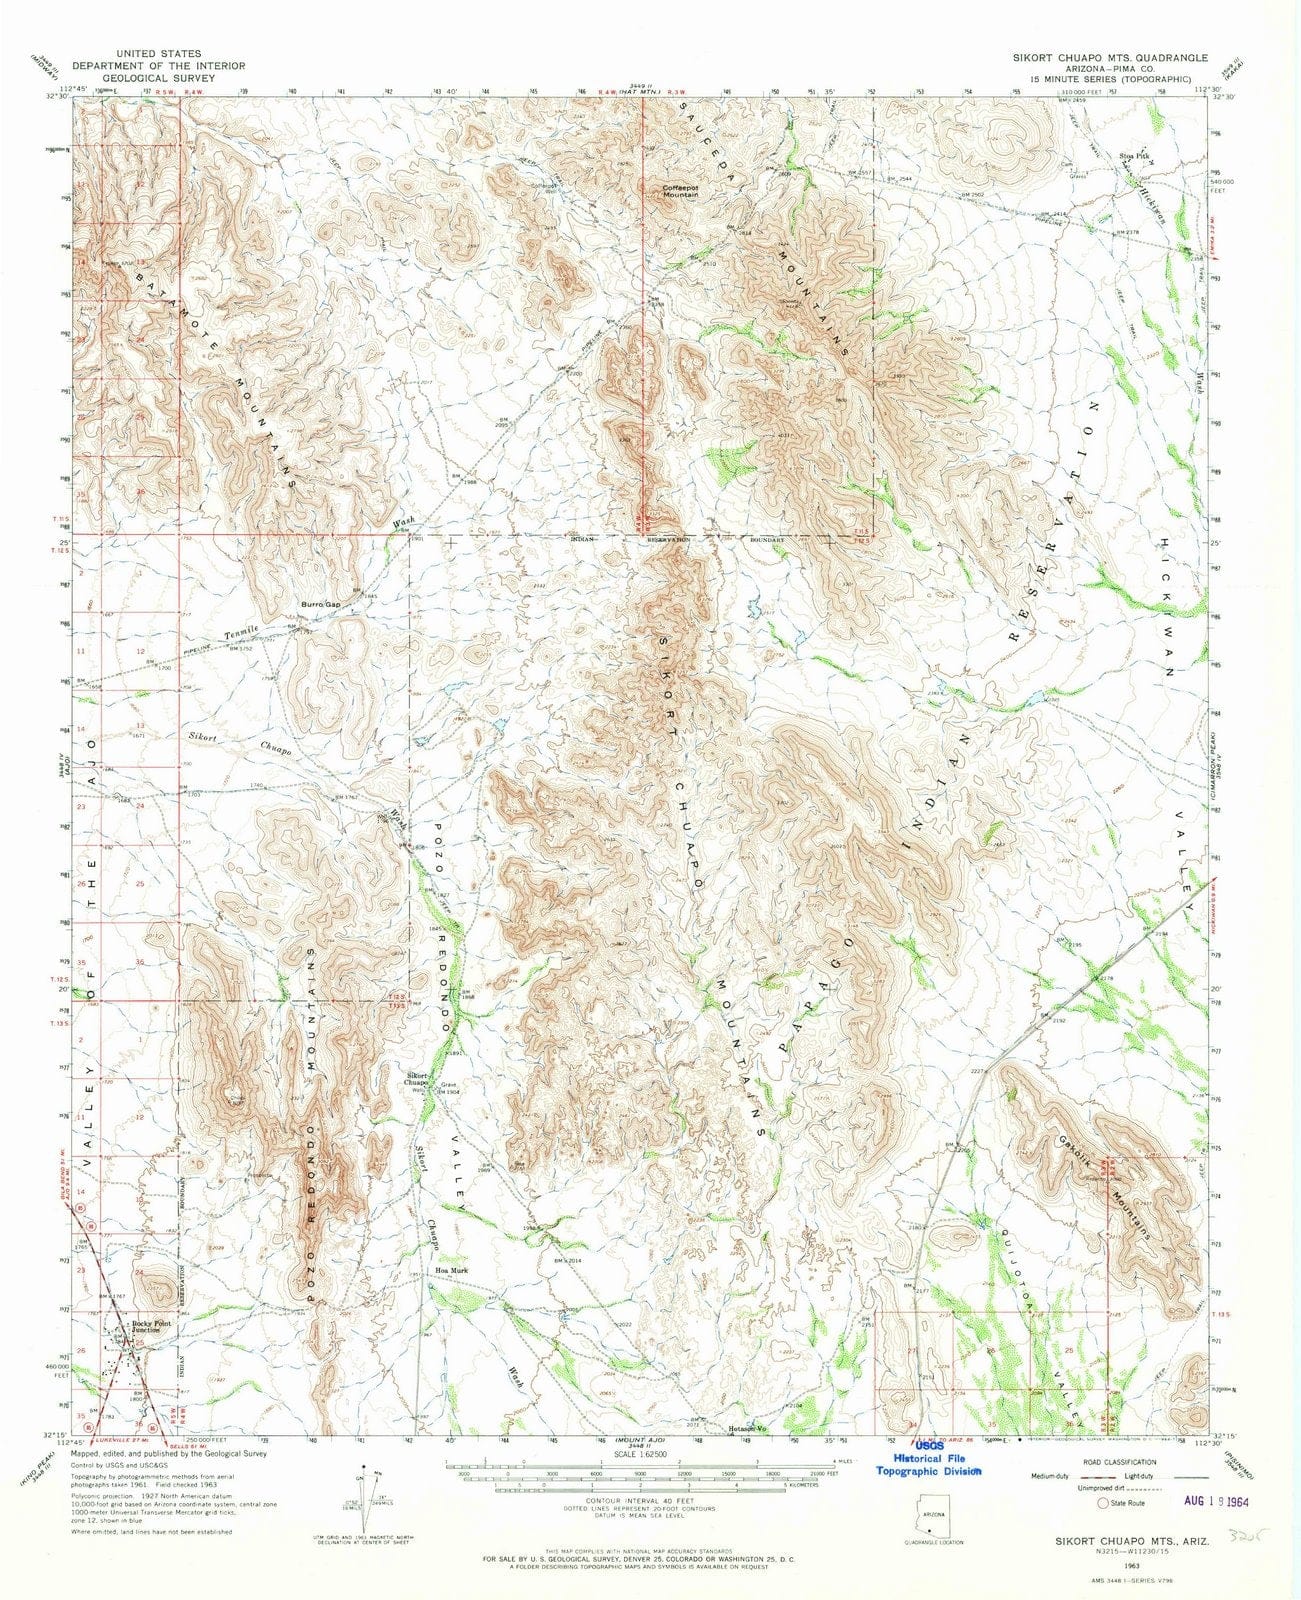 1963 Sikort Chuapo MTS, AZ - Arizona - USGS Topographic Map